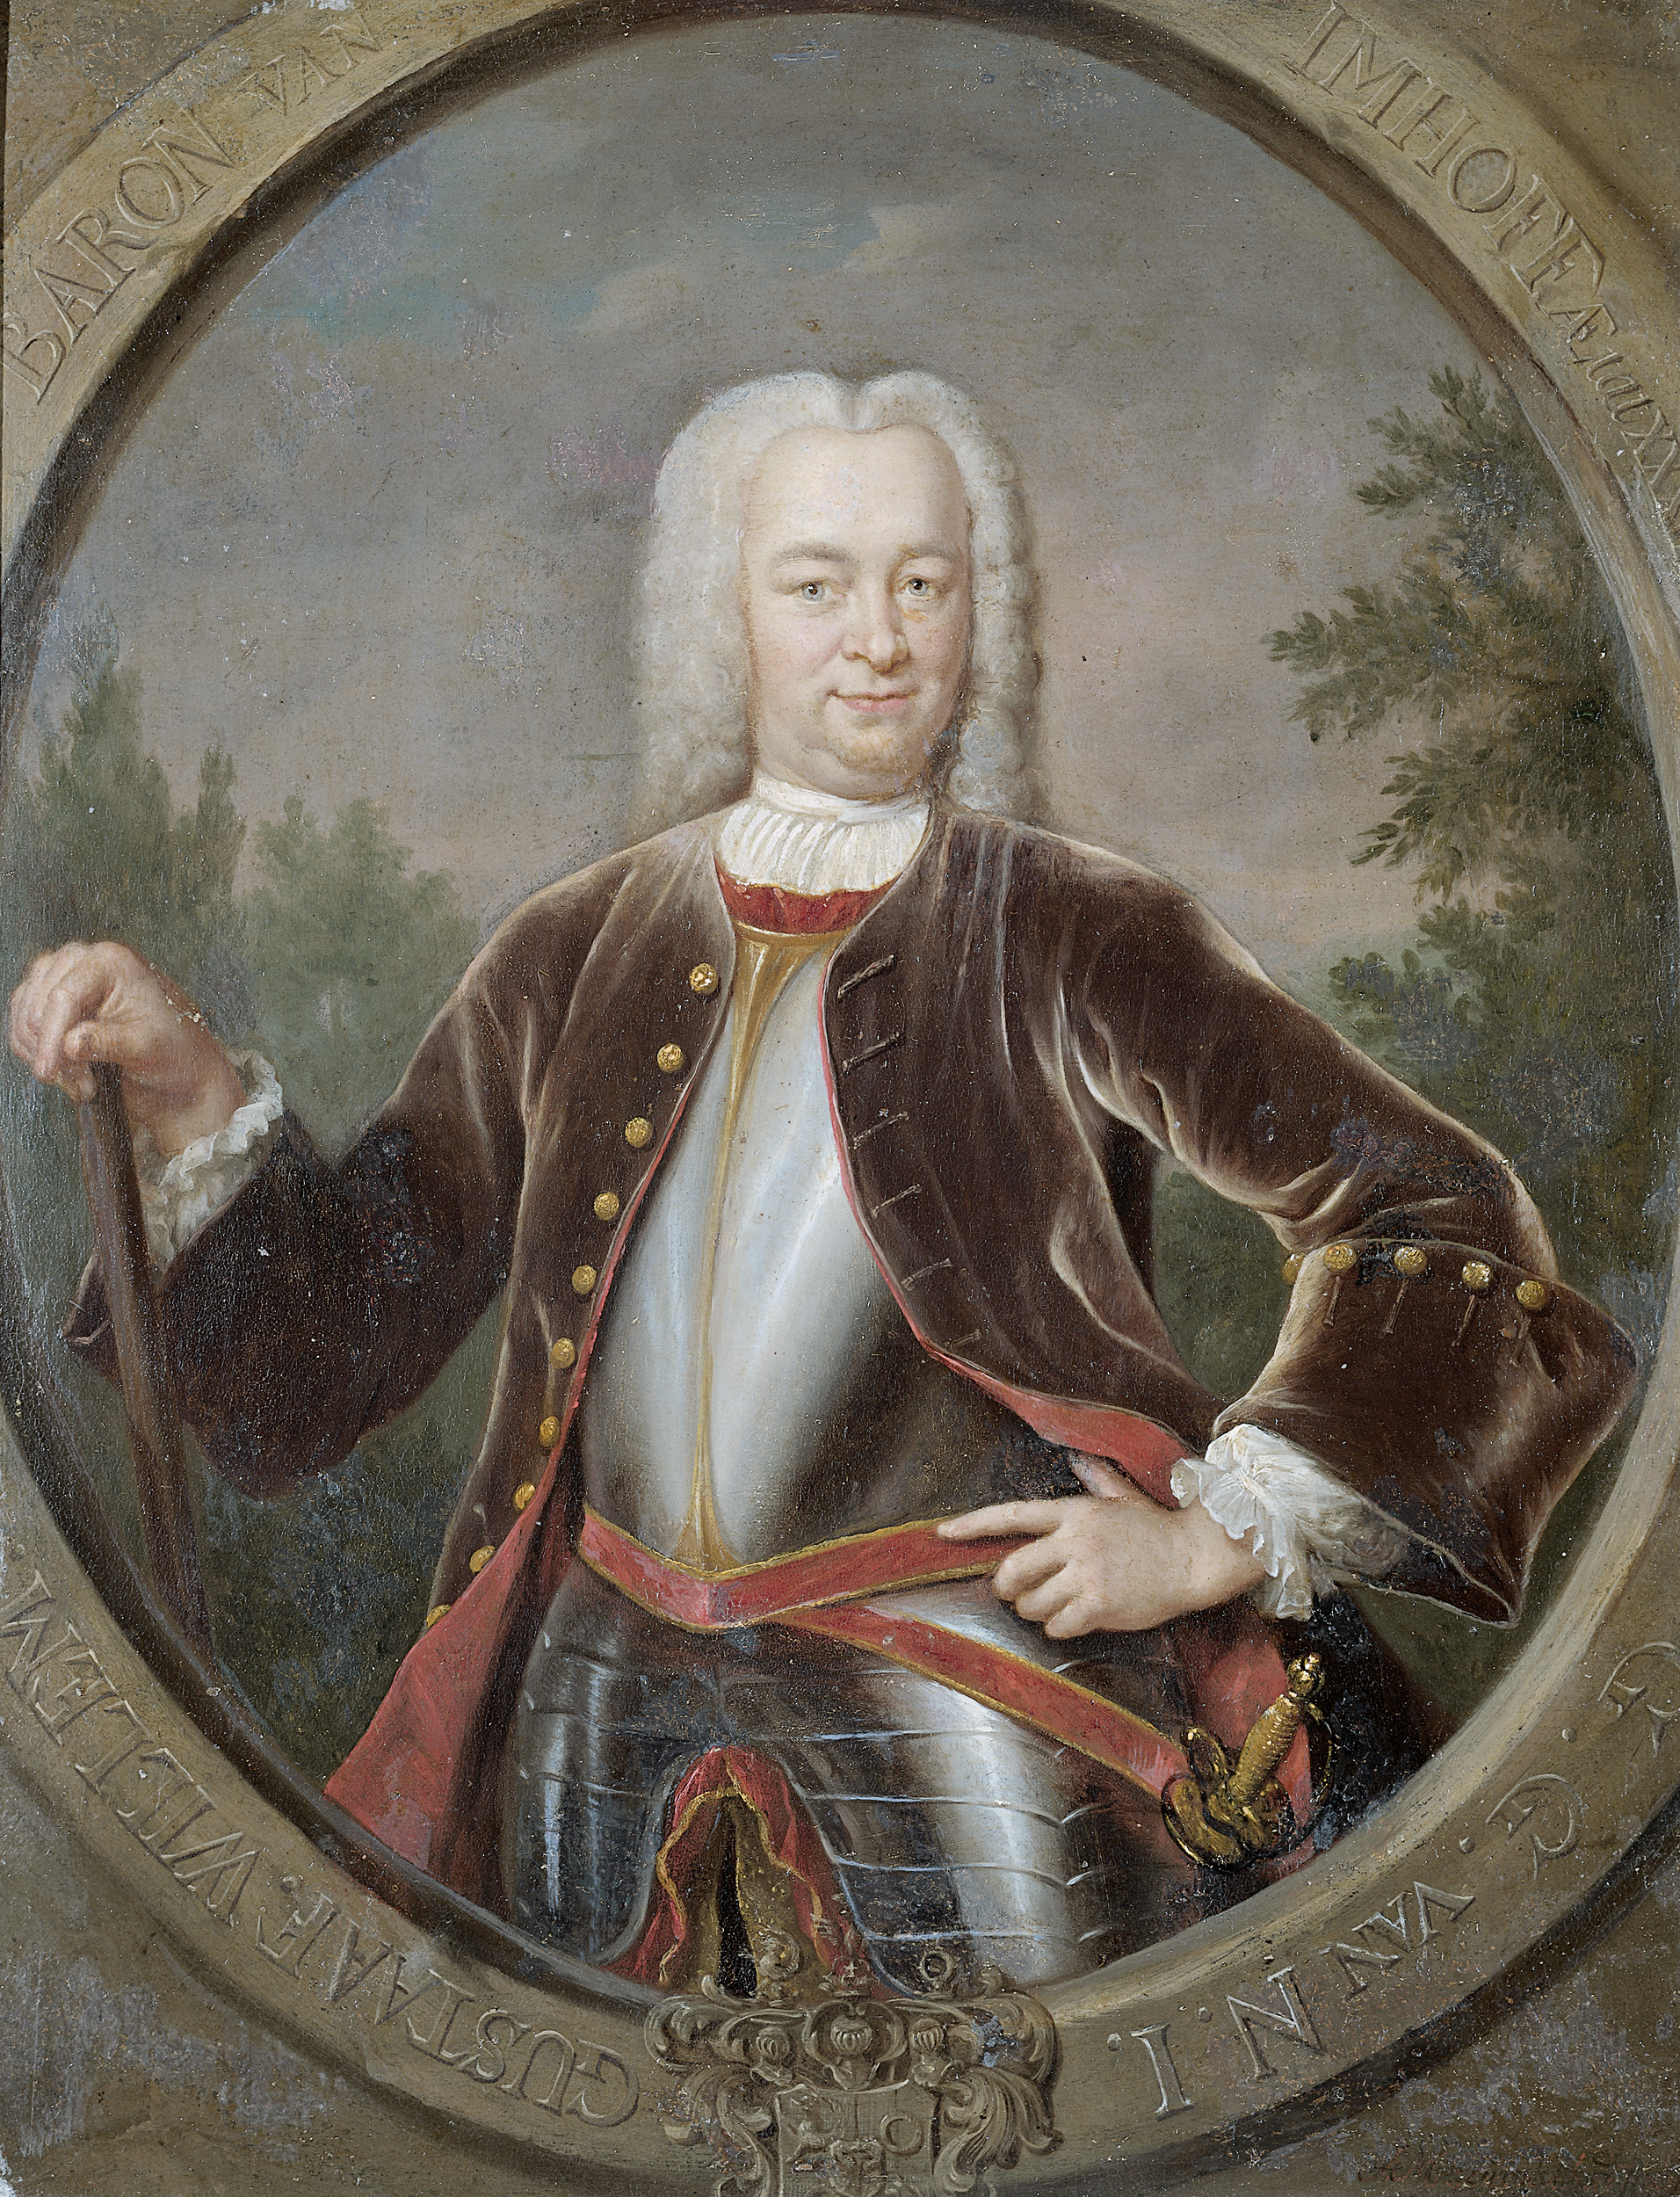 Gustaaf Willem baron van Imhoff2